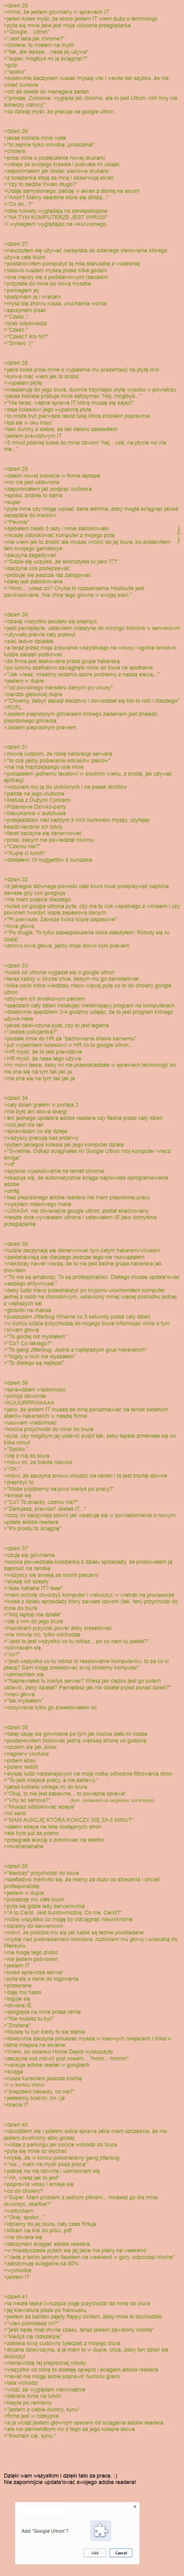 Evil_Anon - #heheszki #pasta #humorinformatykow #humor

Ile ja się tego naszukałem ...